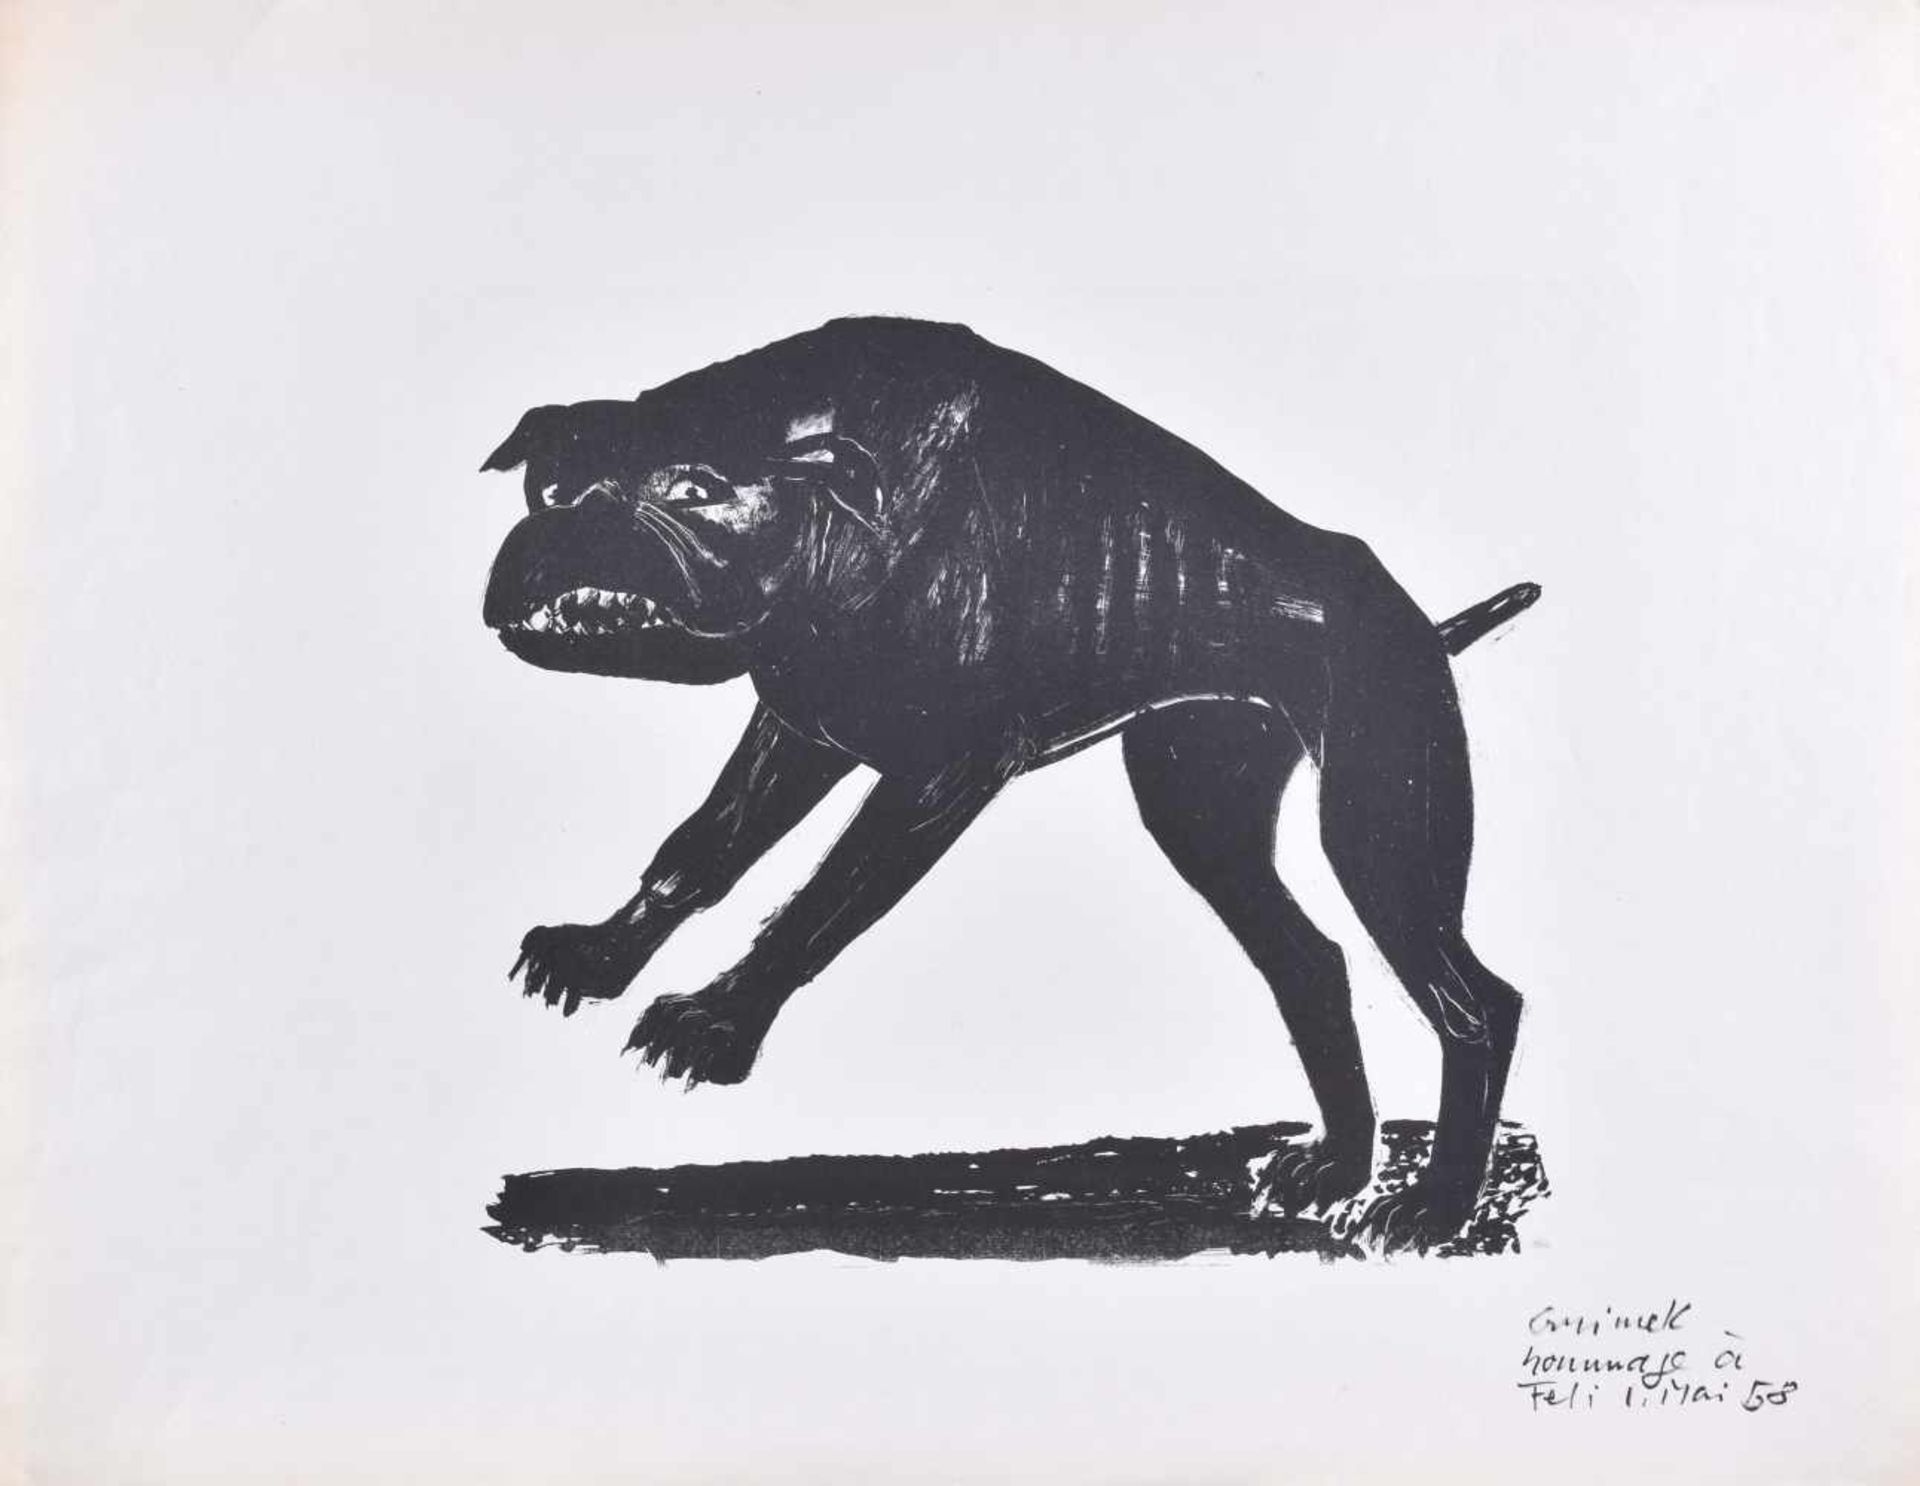 Waldemar GRZIMEK (1918-1984)"Homage an Feli"Grafik - Lithographie auf Bütten, Blattgröße 49 cm x